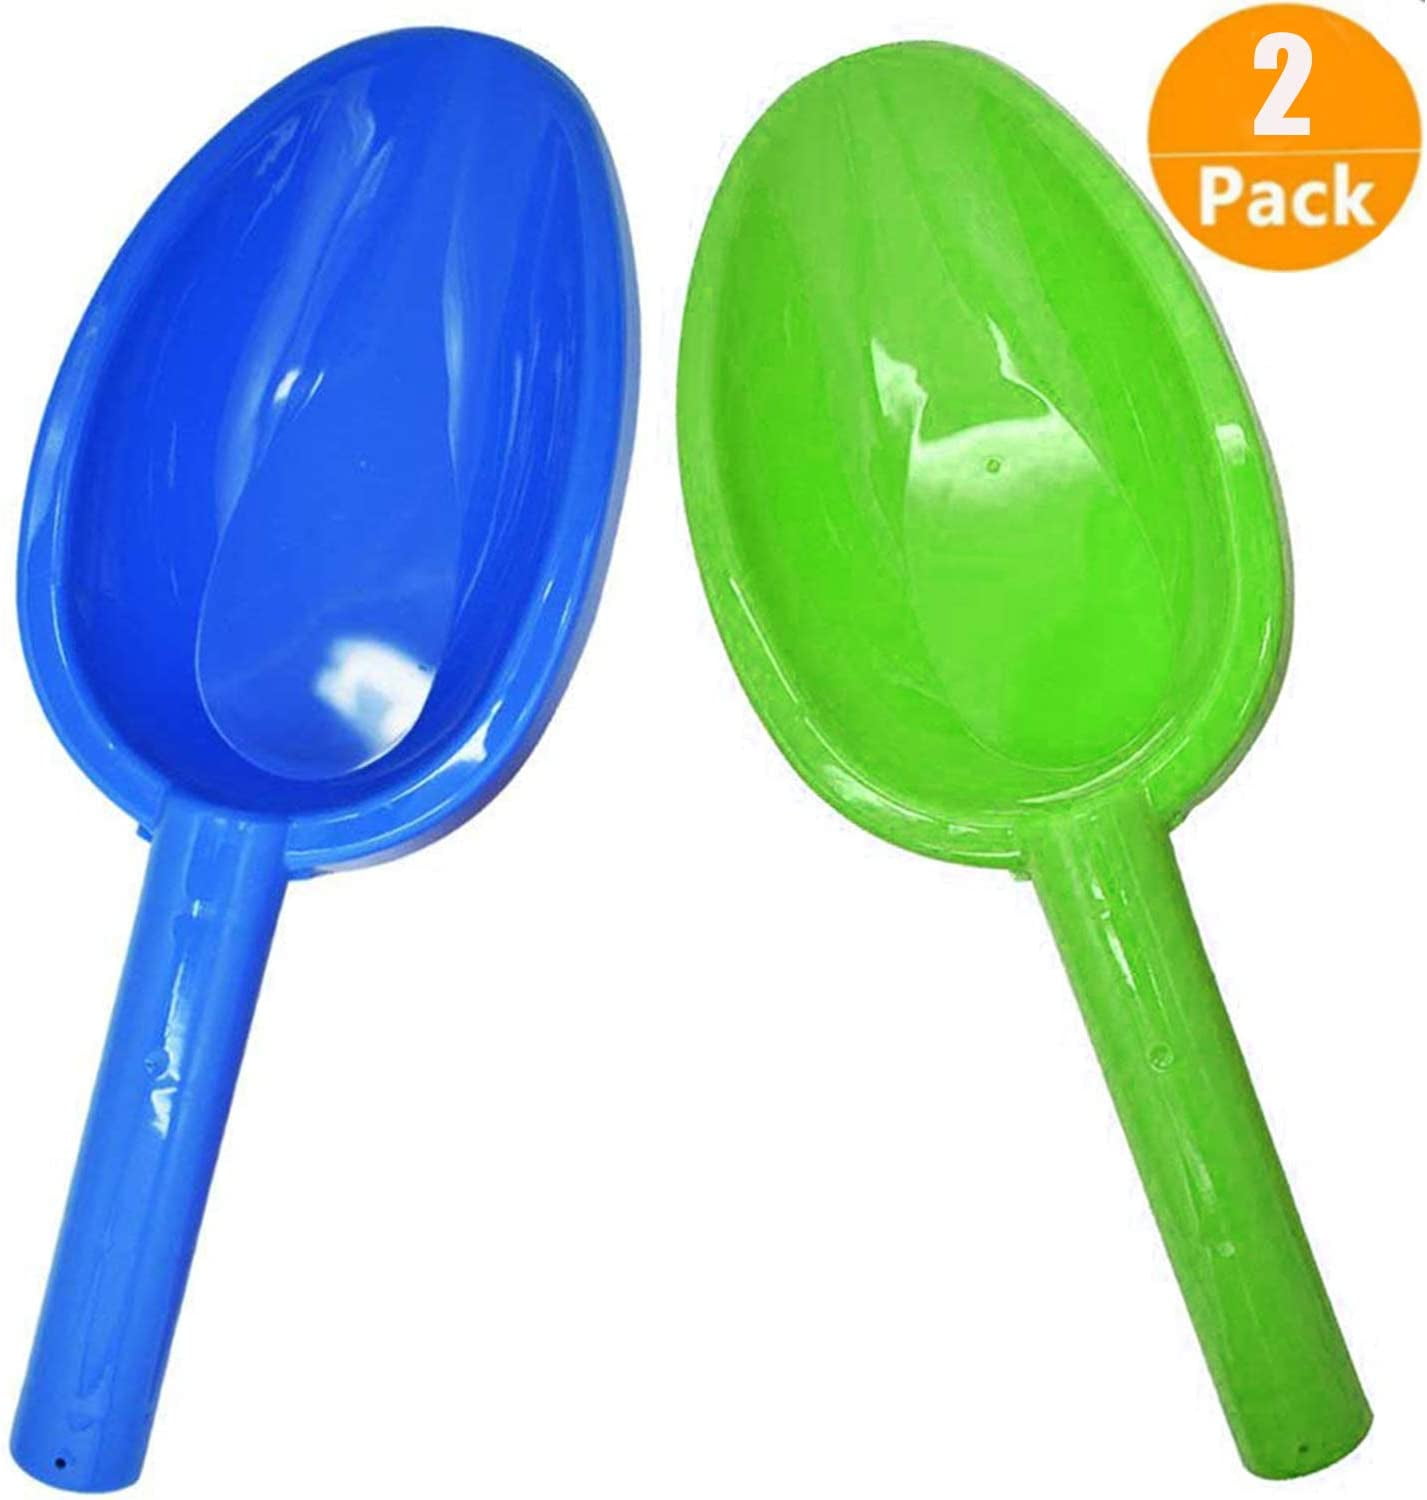 Mattys Toy Stop 9 Kids Short Handle Sand Scoop Plastic Shovels for Sand & Beach Gift Set Bundle 3 Pack Yellow, Blue & Green 